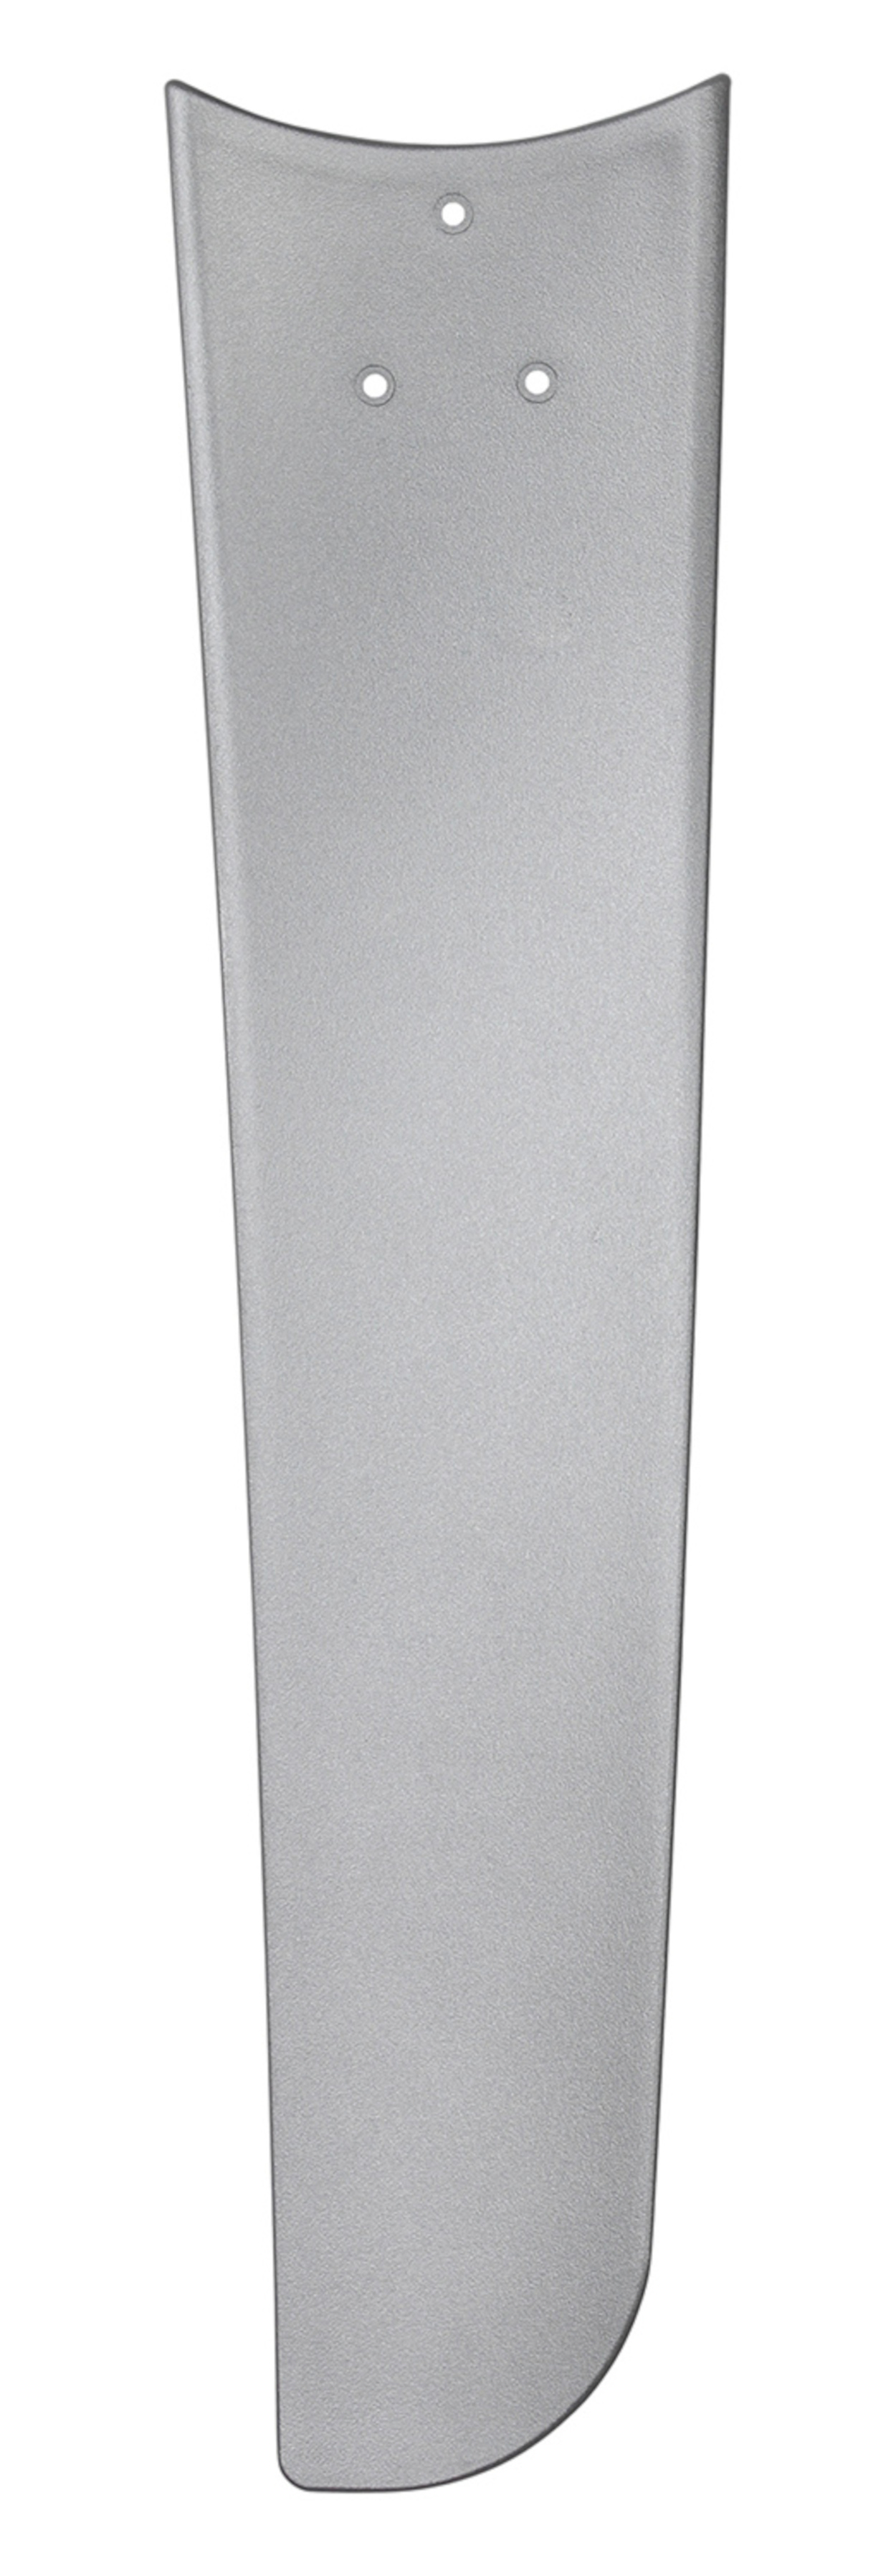 / CASAFAN Watt) Deckenventilator Silber Grau Mirage (62